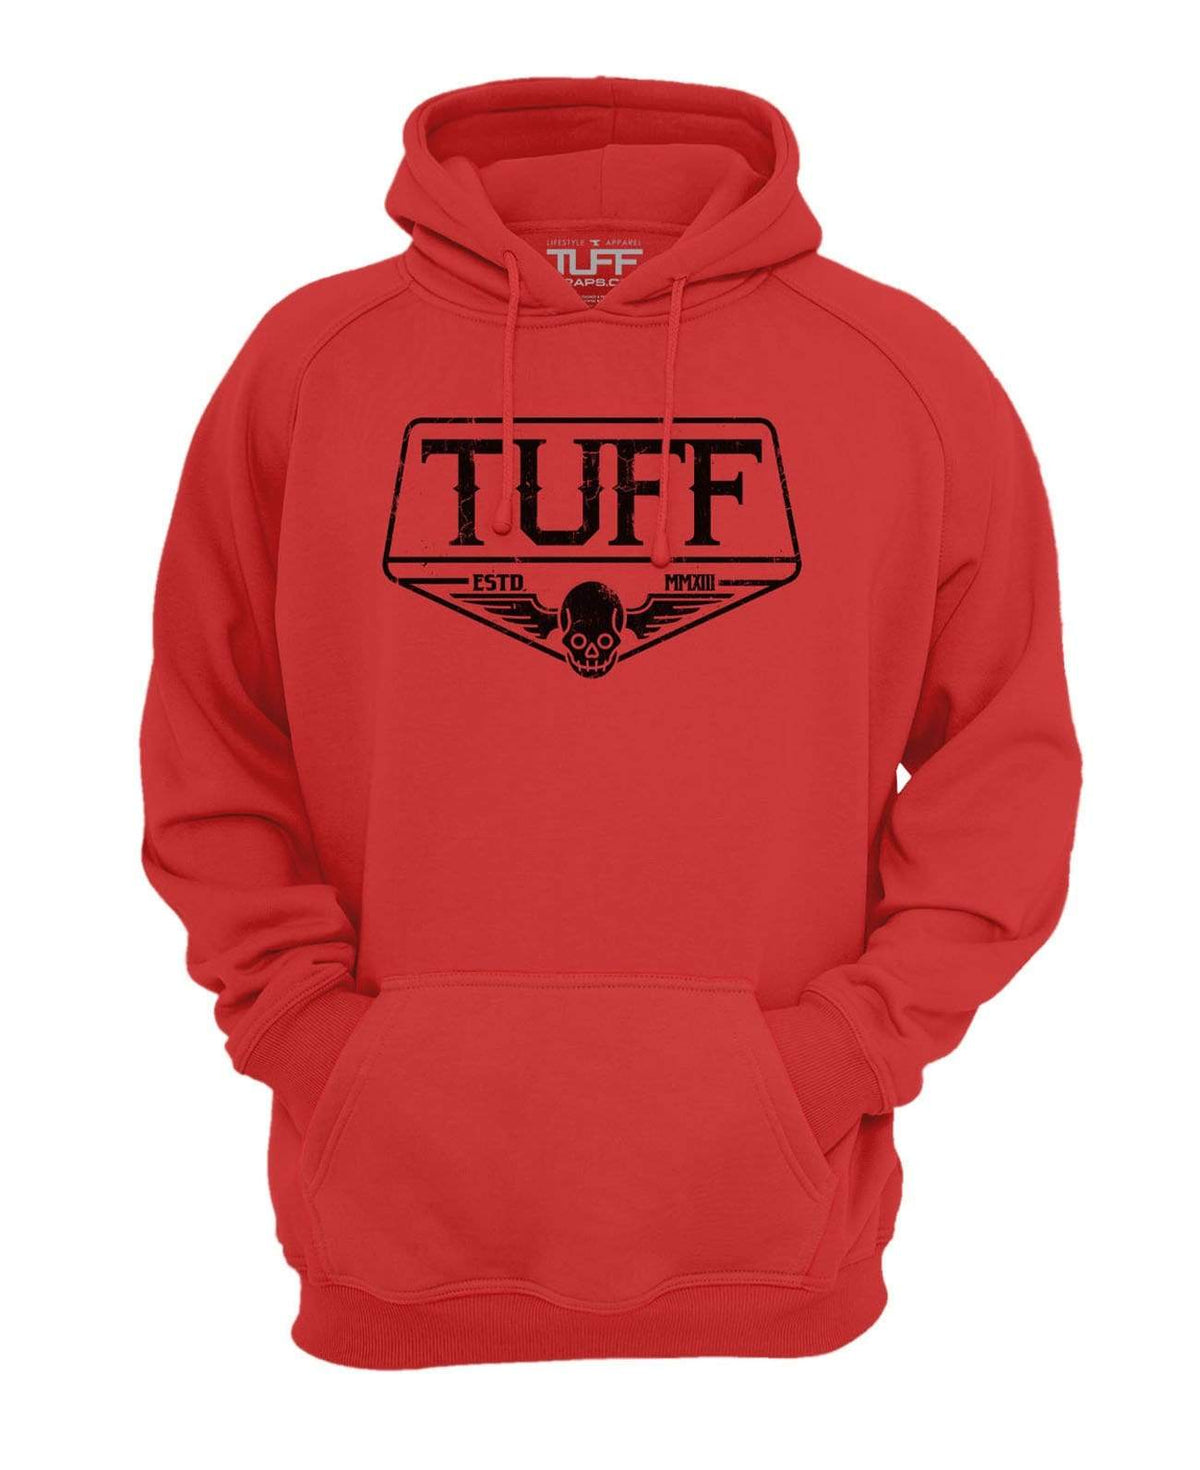 TUFF Skull Wings Hooded Sweatshirt XS / Red TuffWraps.com